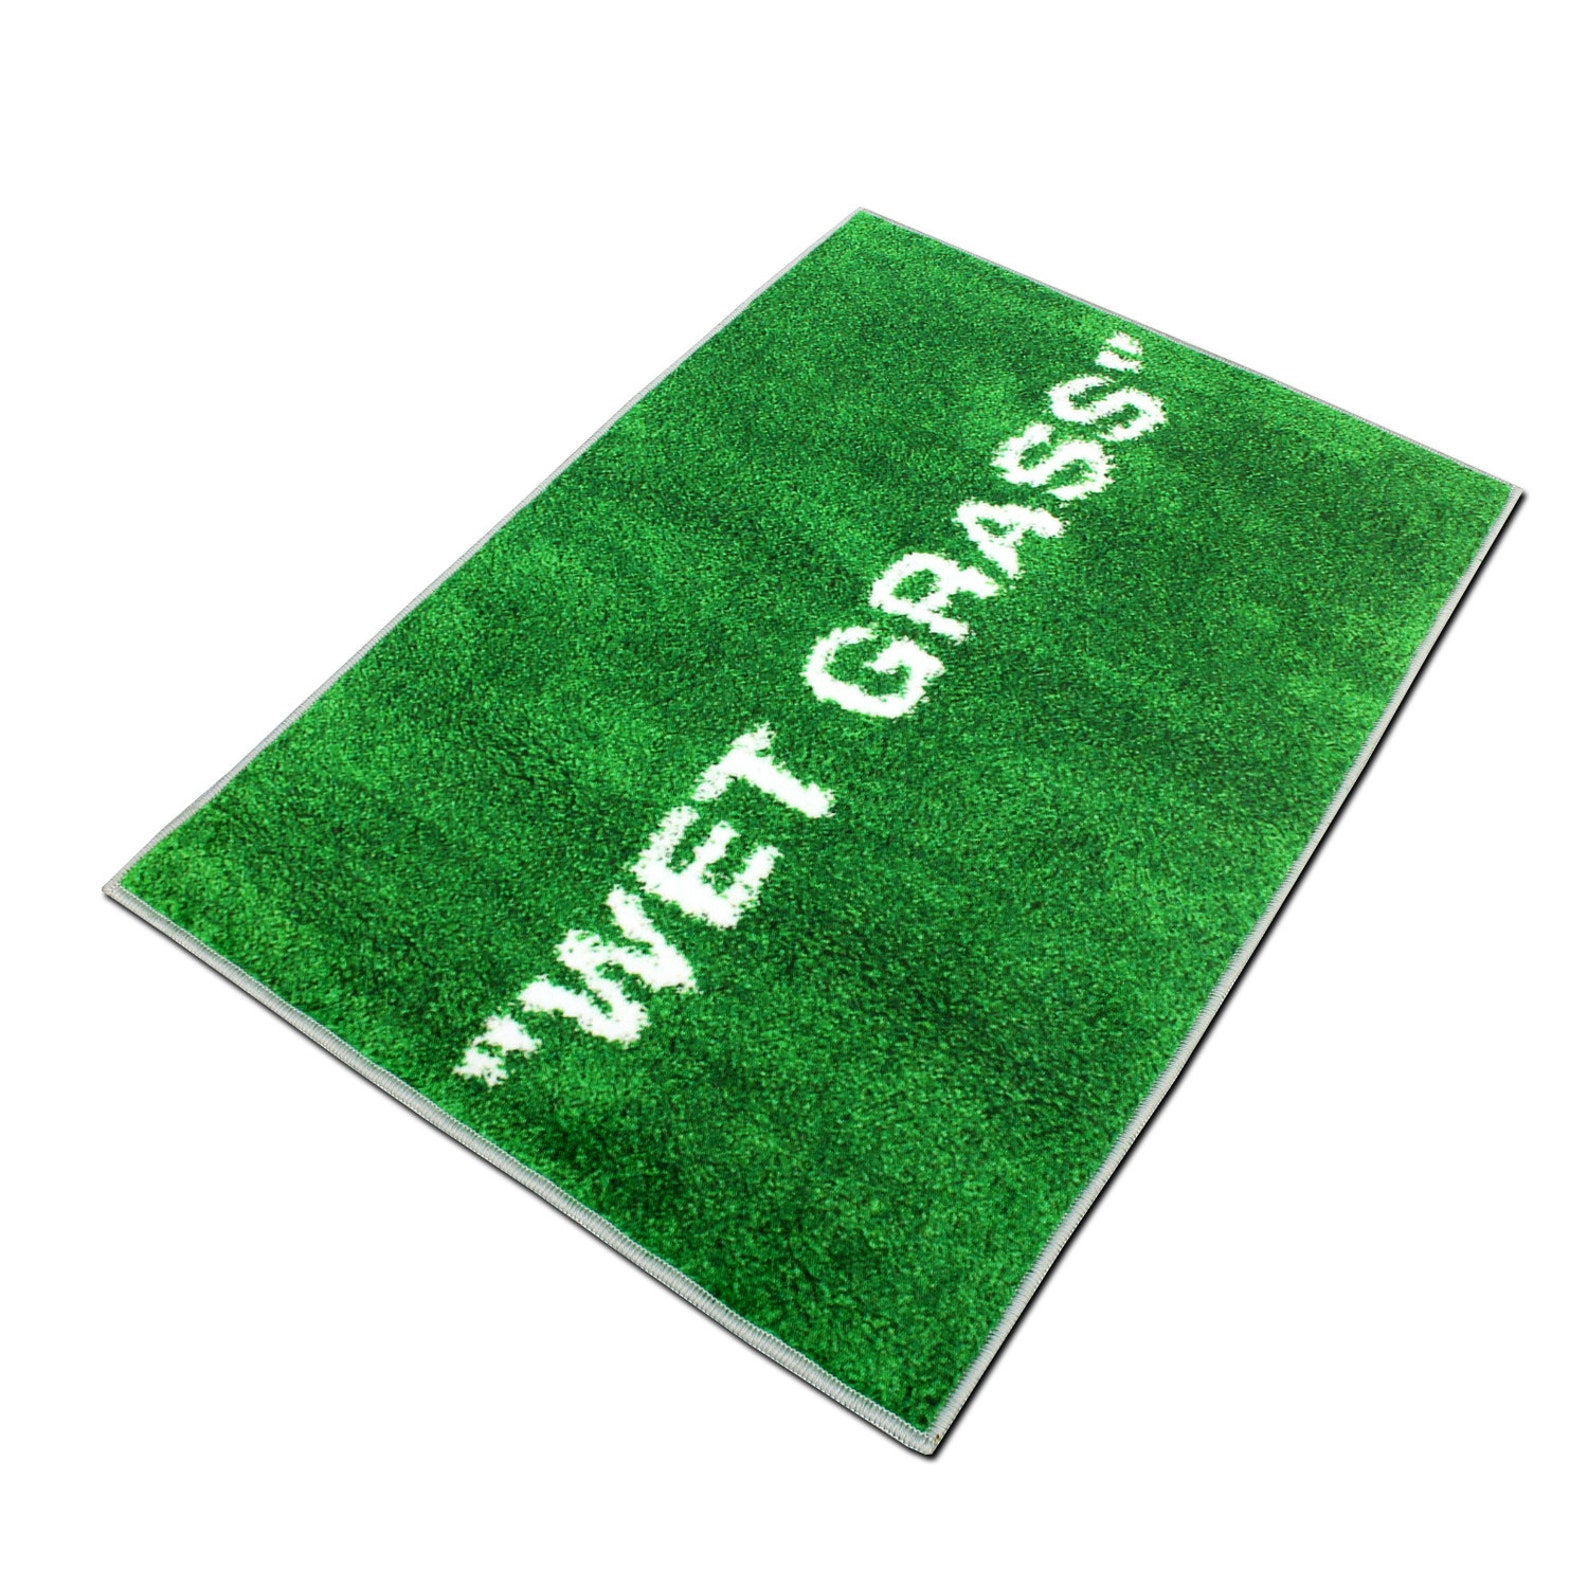 Wet Grass Weet Grass Round Rug Patterned Rug Wet Grass Rug | Etsy